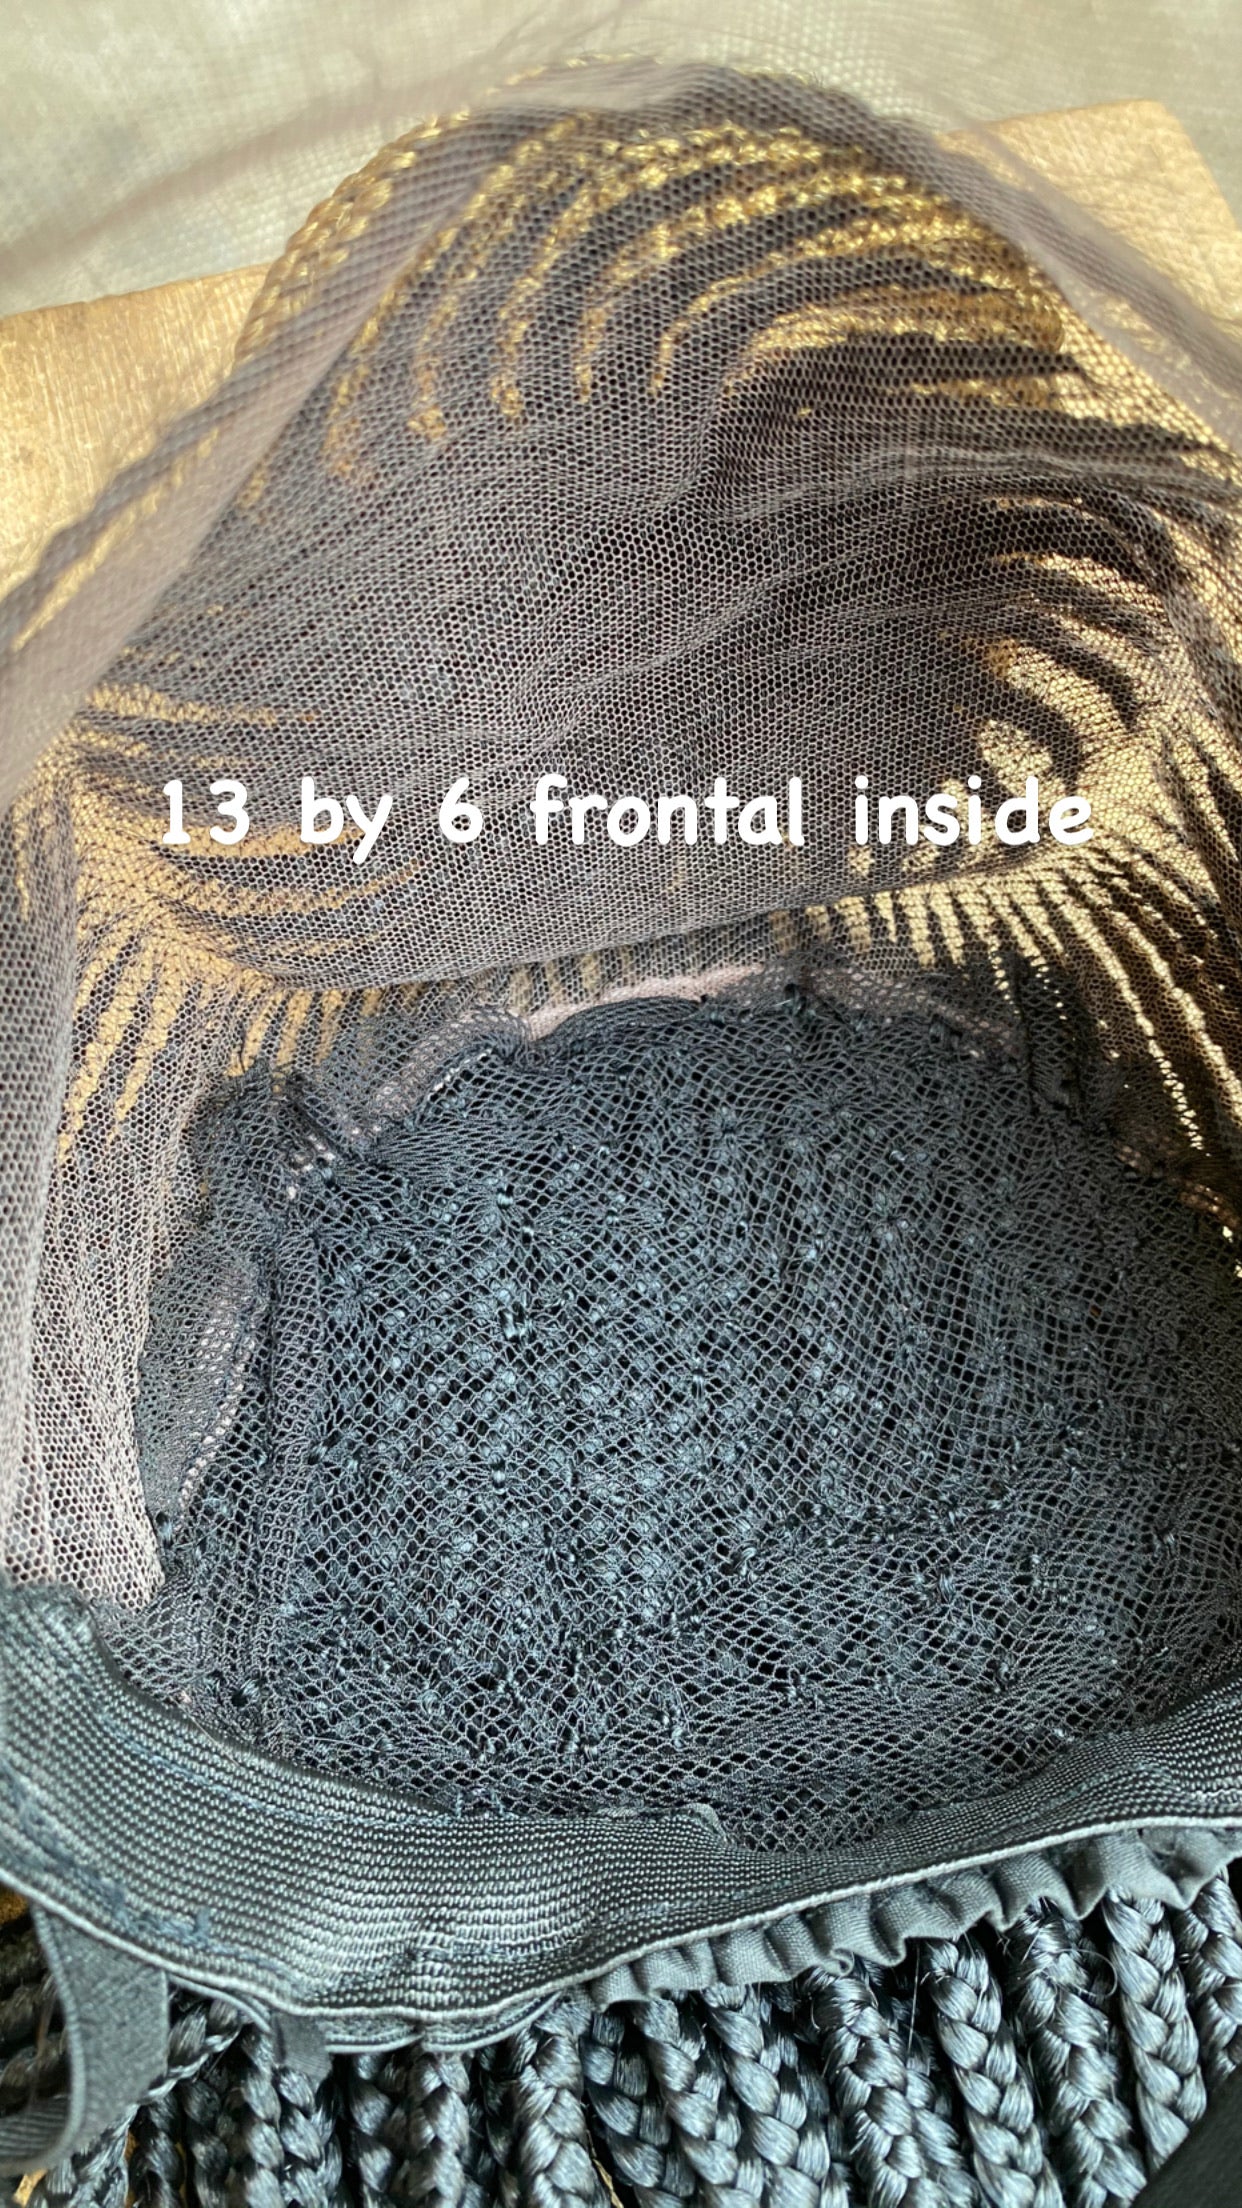 Cornrow Braided Wig "13 by 6 Lace Frontal" C-cut Poshglad Braided Wigs Cornrow Braid Wig